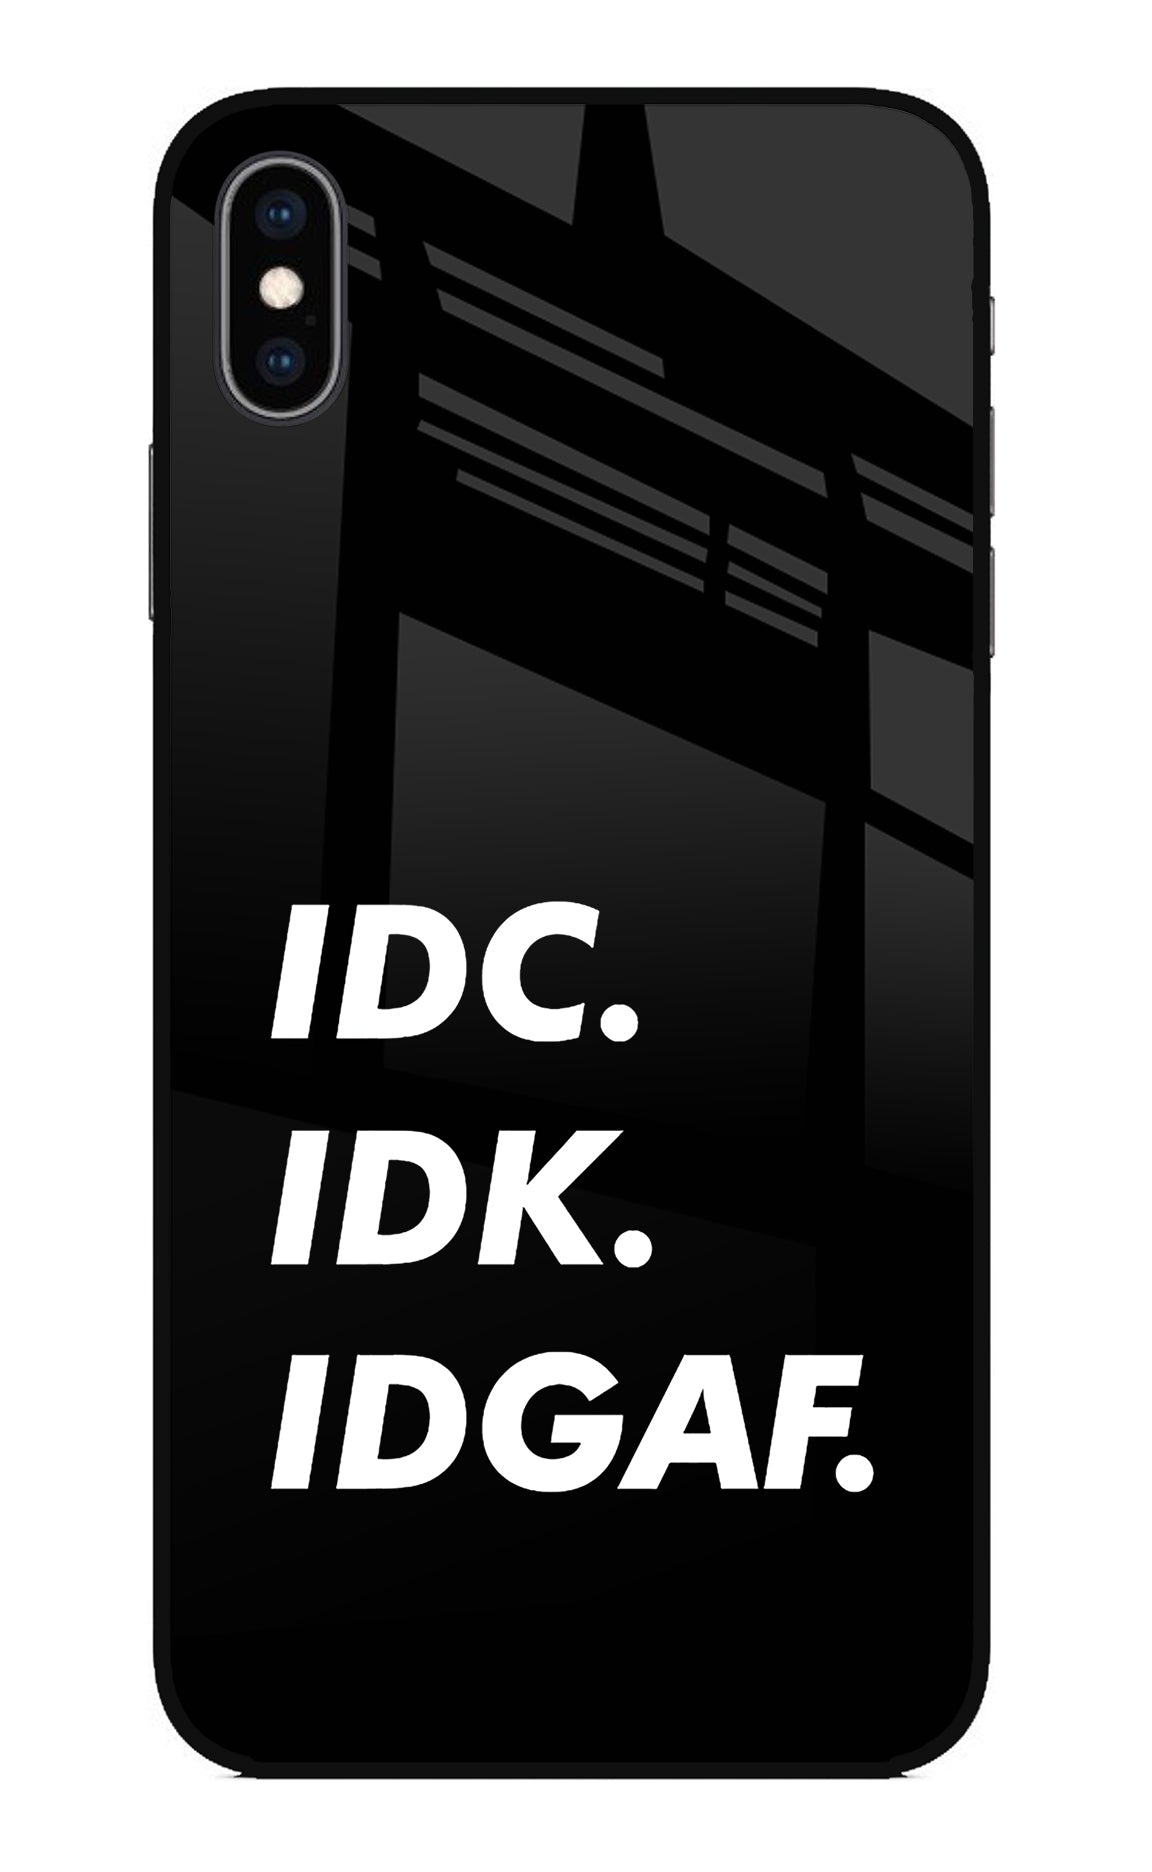 Idc Idk Idgaf iPhone XS Max Back Cover